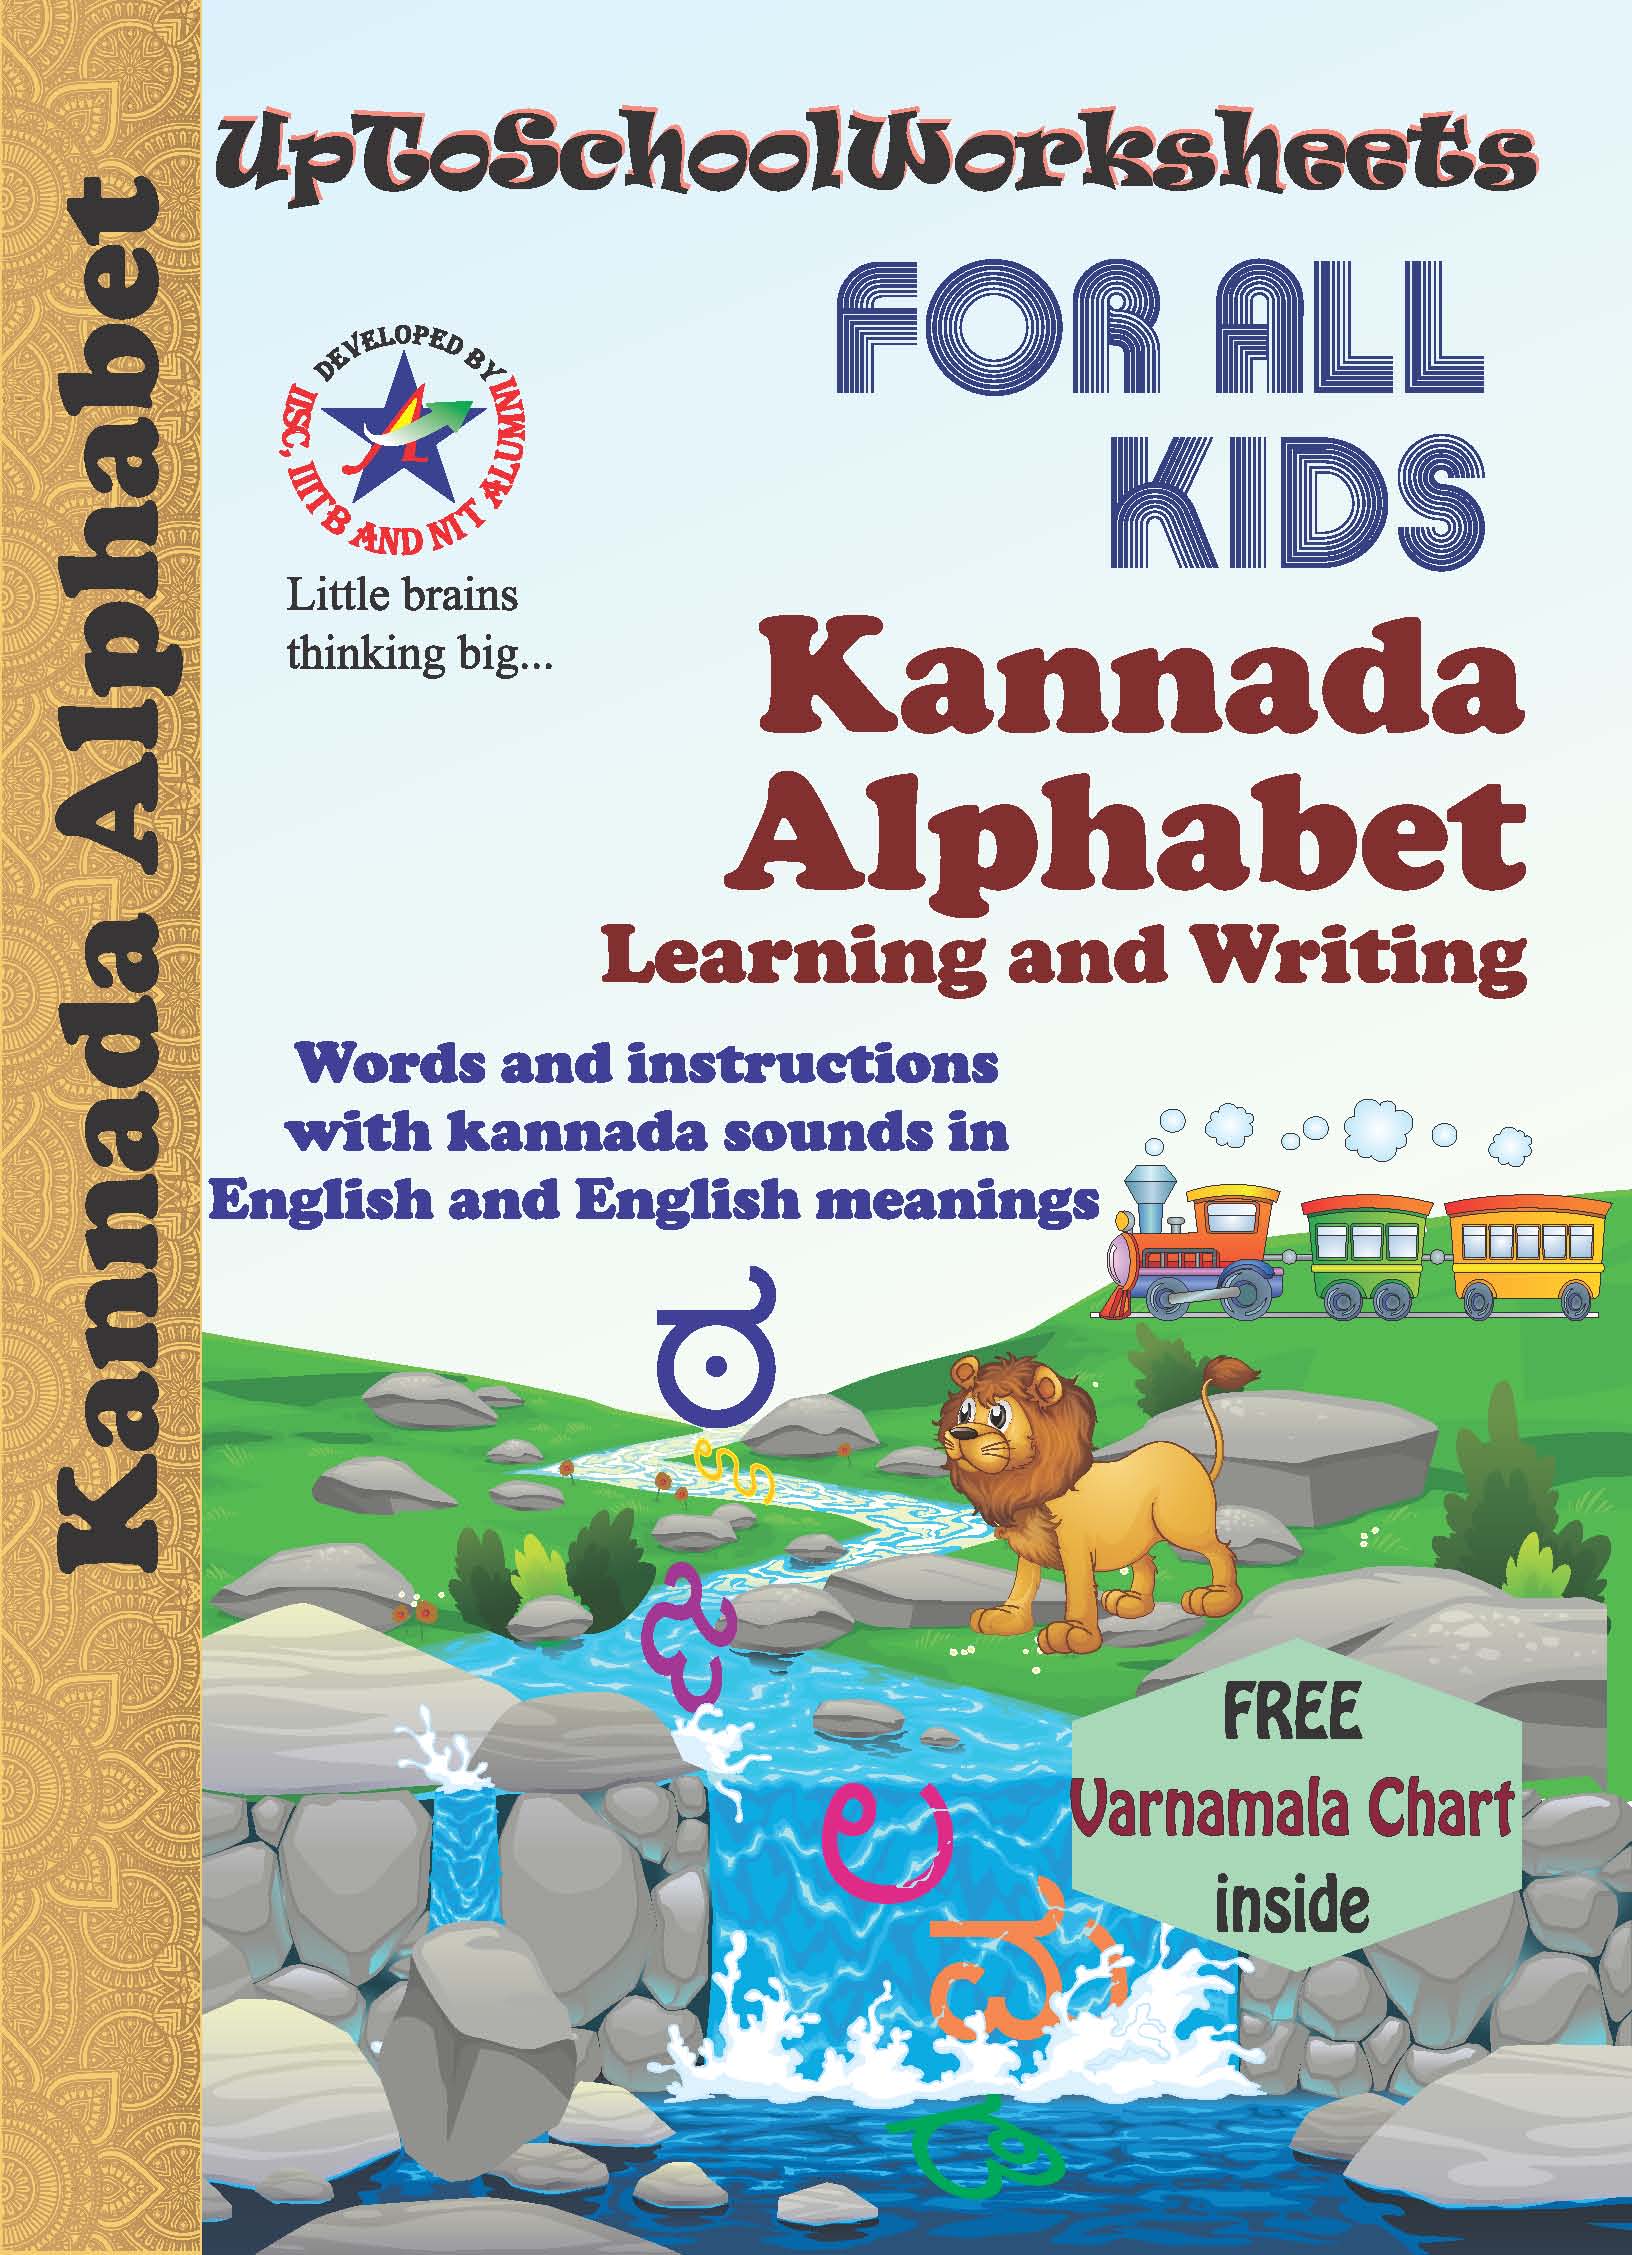 Kannada Alphabet Learning and Writing